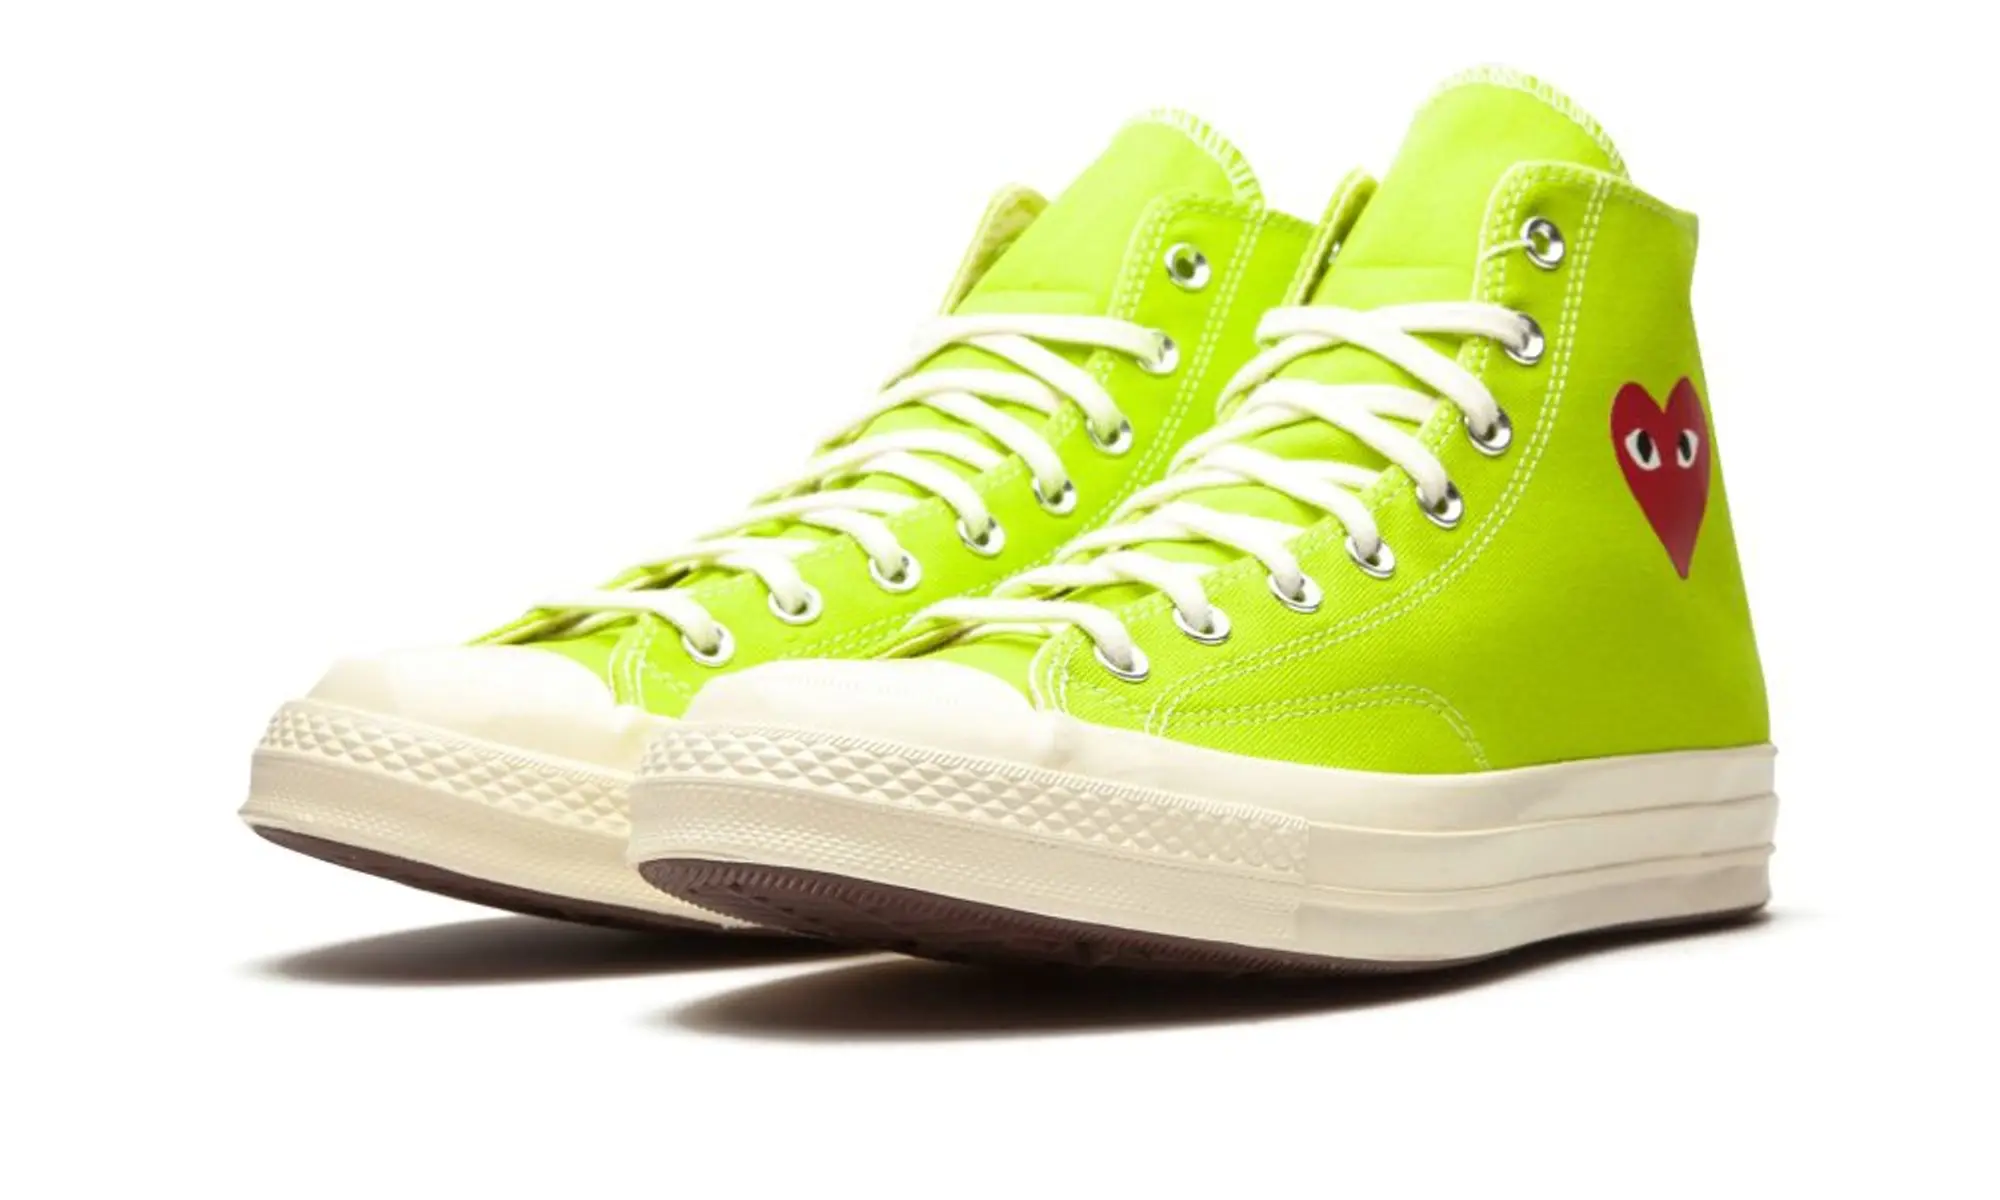 Converse Chuck 70 CDG OX AC Bright Green Shoes